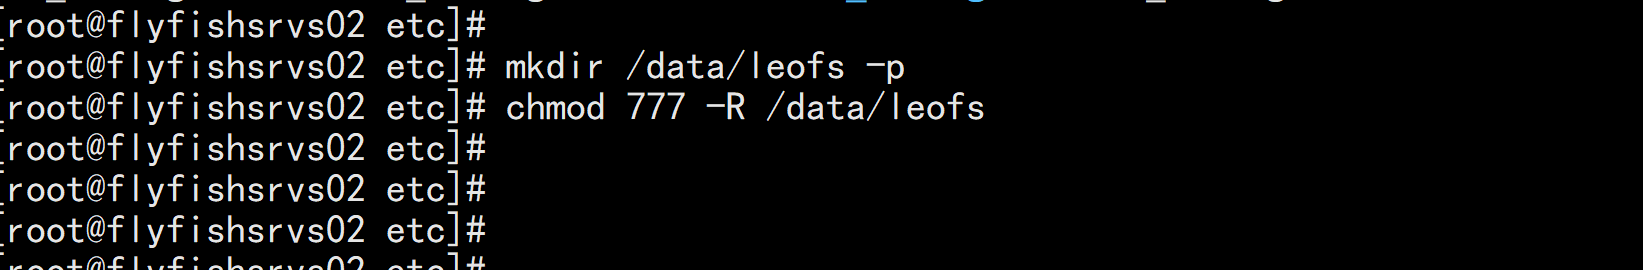 leofs 分布式存储部署安装